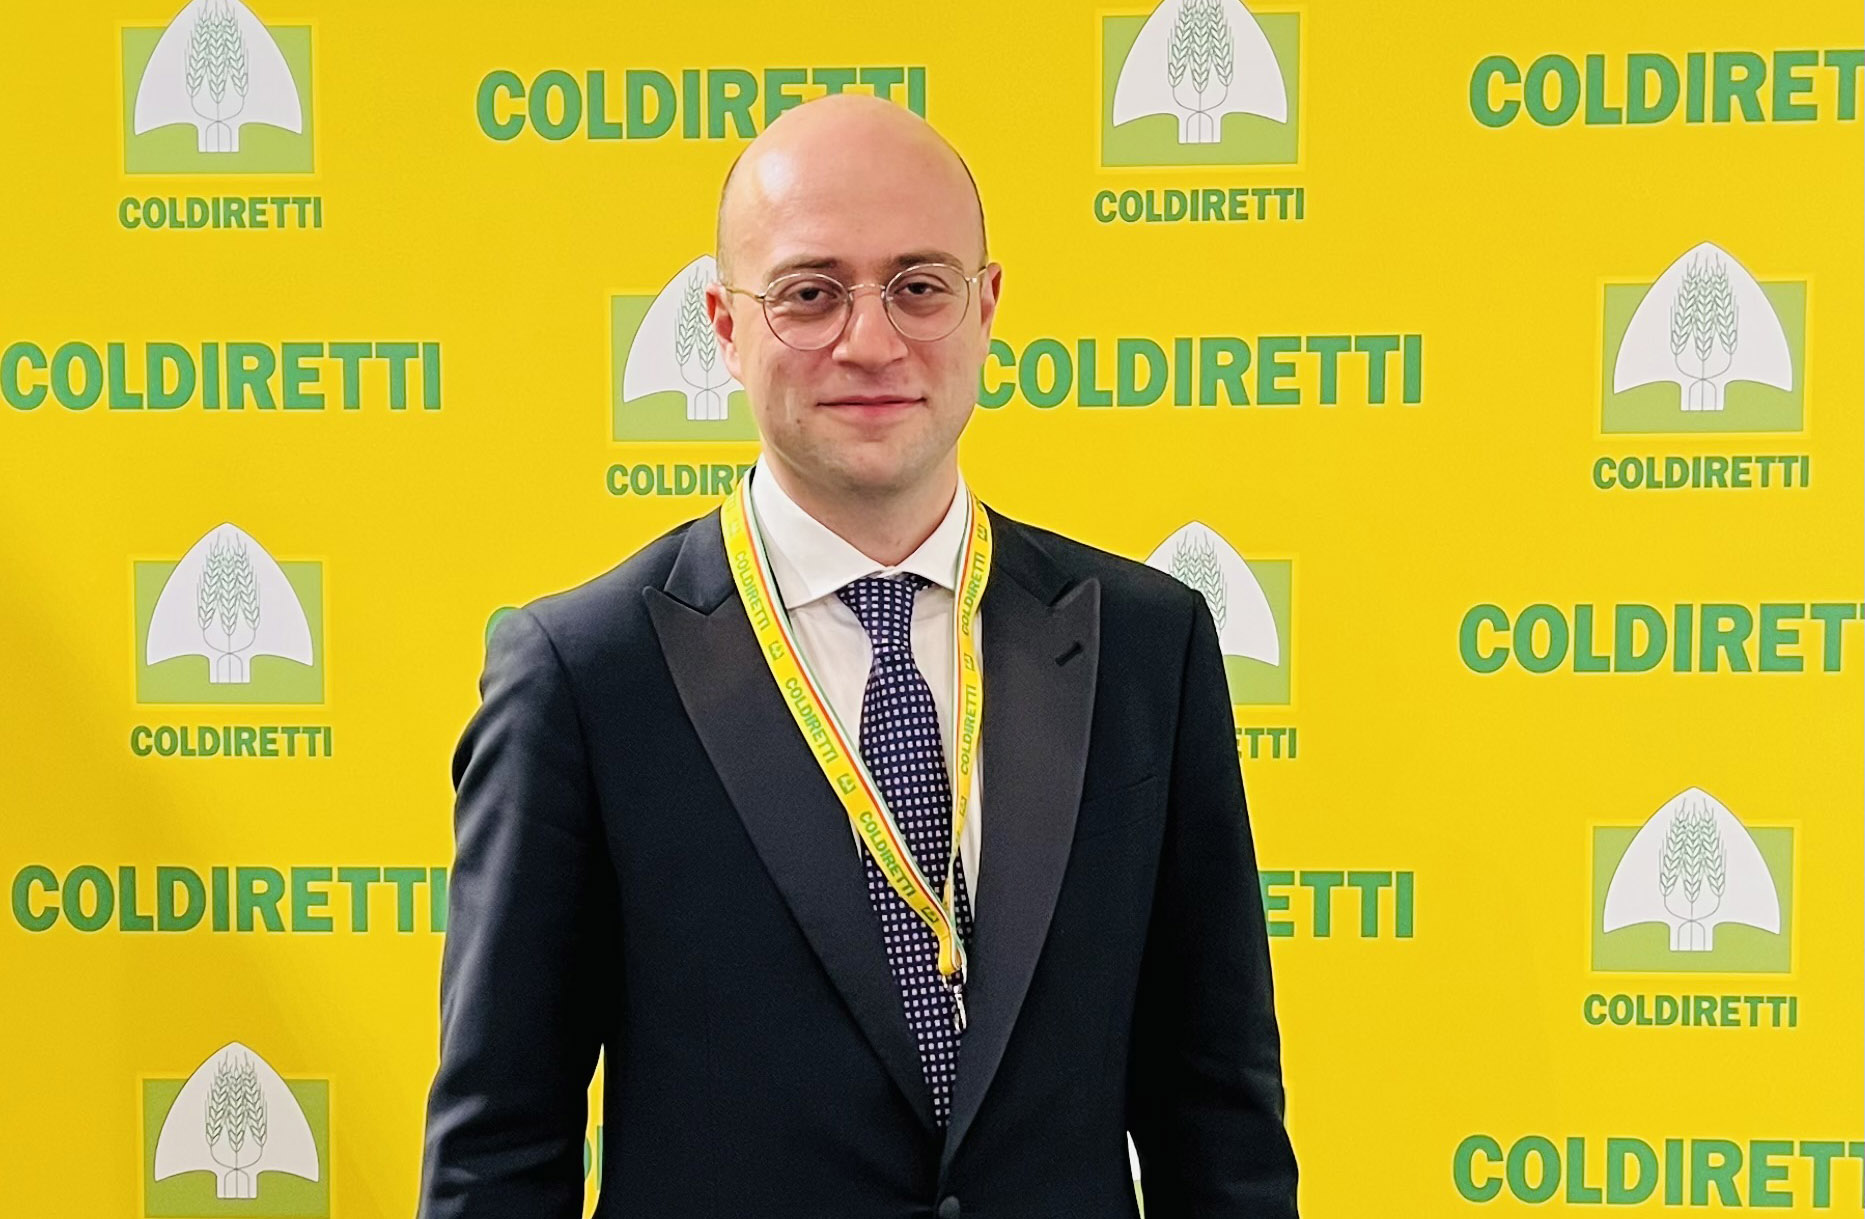 Igor Vitale introduce the project at the Italian Confederation of Agriculture (Coldiretti Umbria Region)